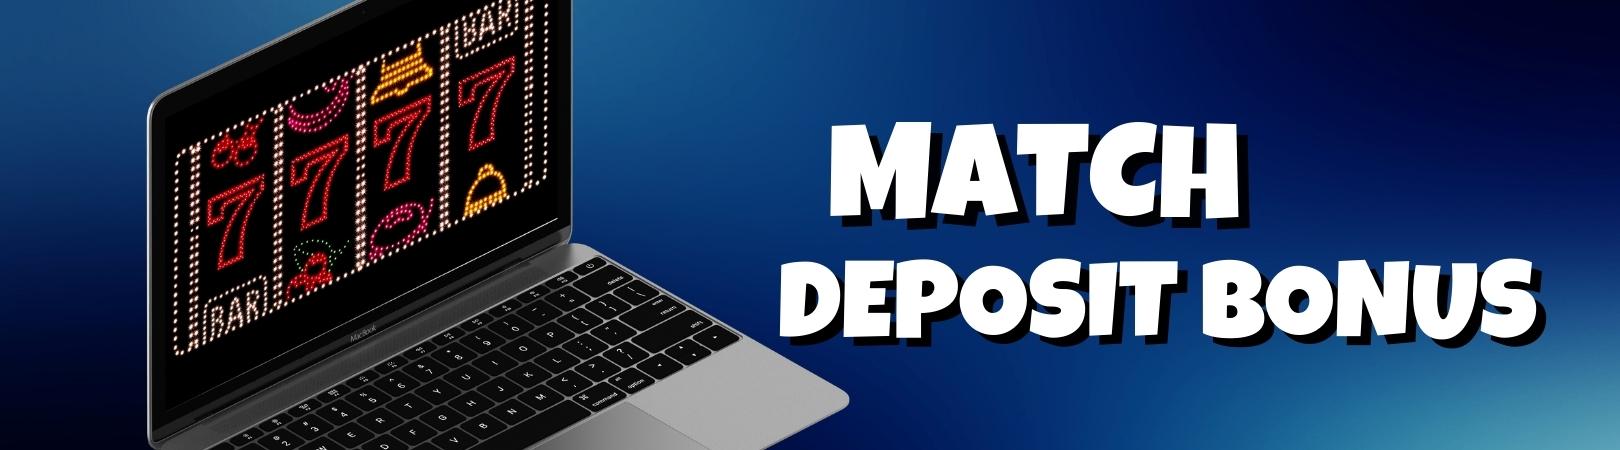 Match deposit bonus